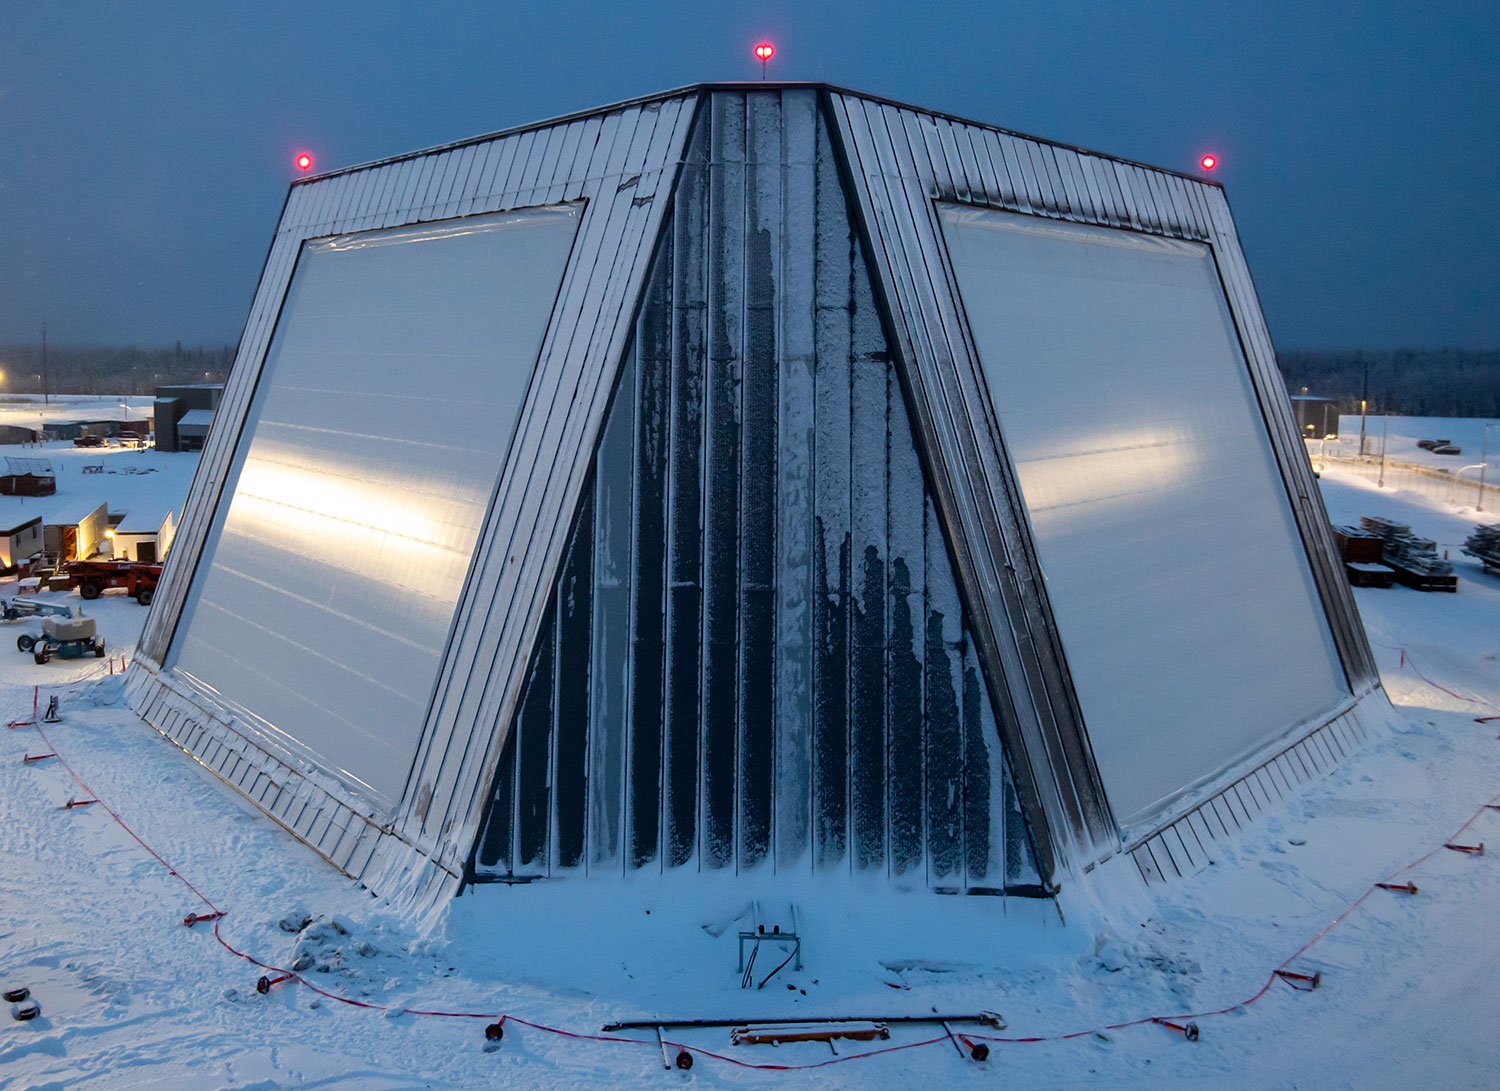 U.S. Missile Defense Agency fields long-range radar in Alaska for missile threats.